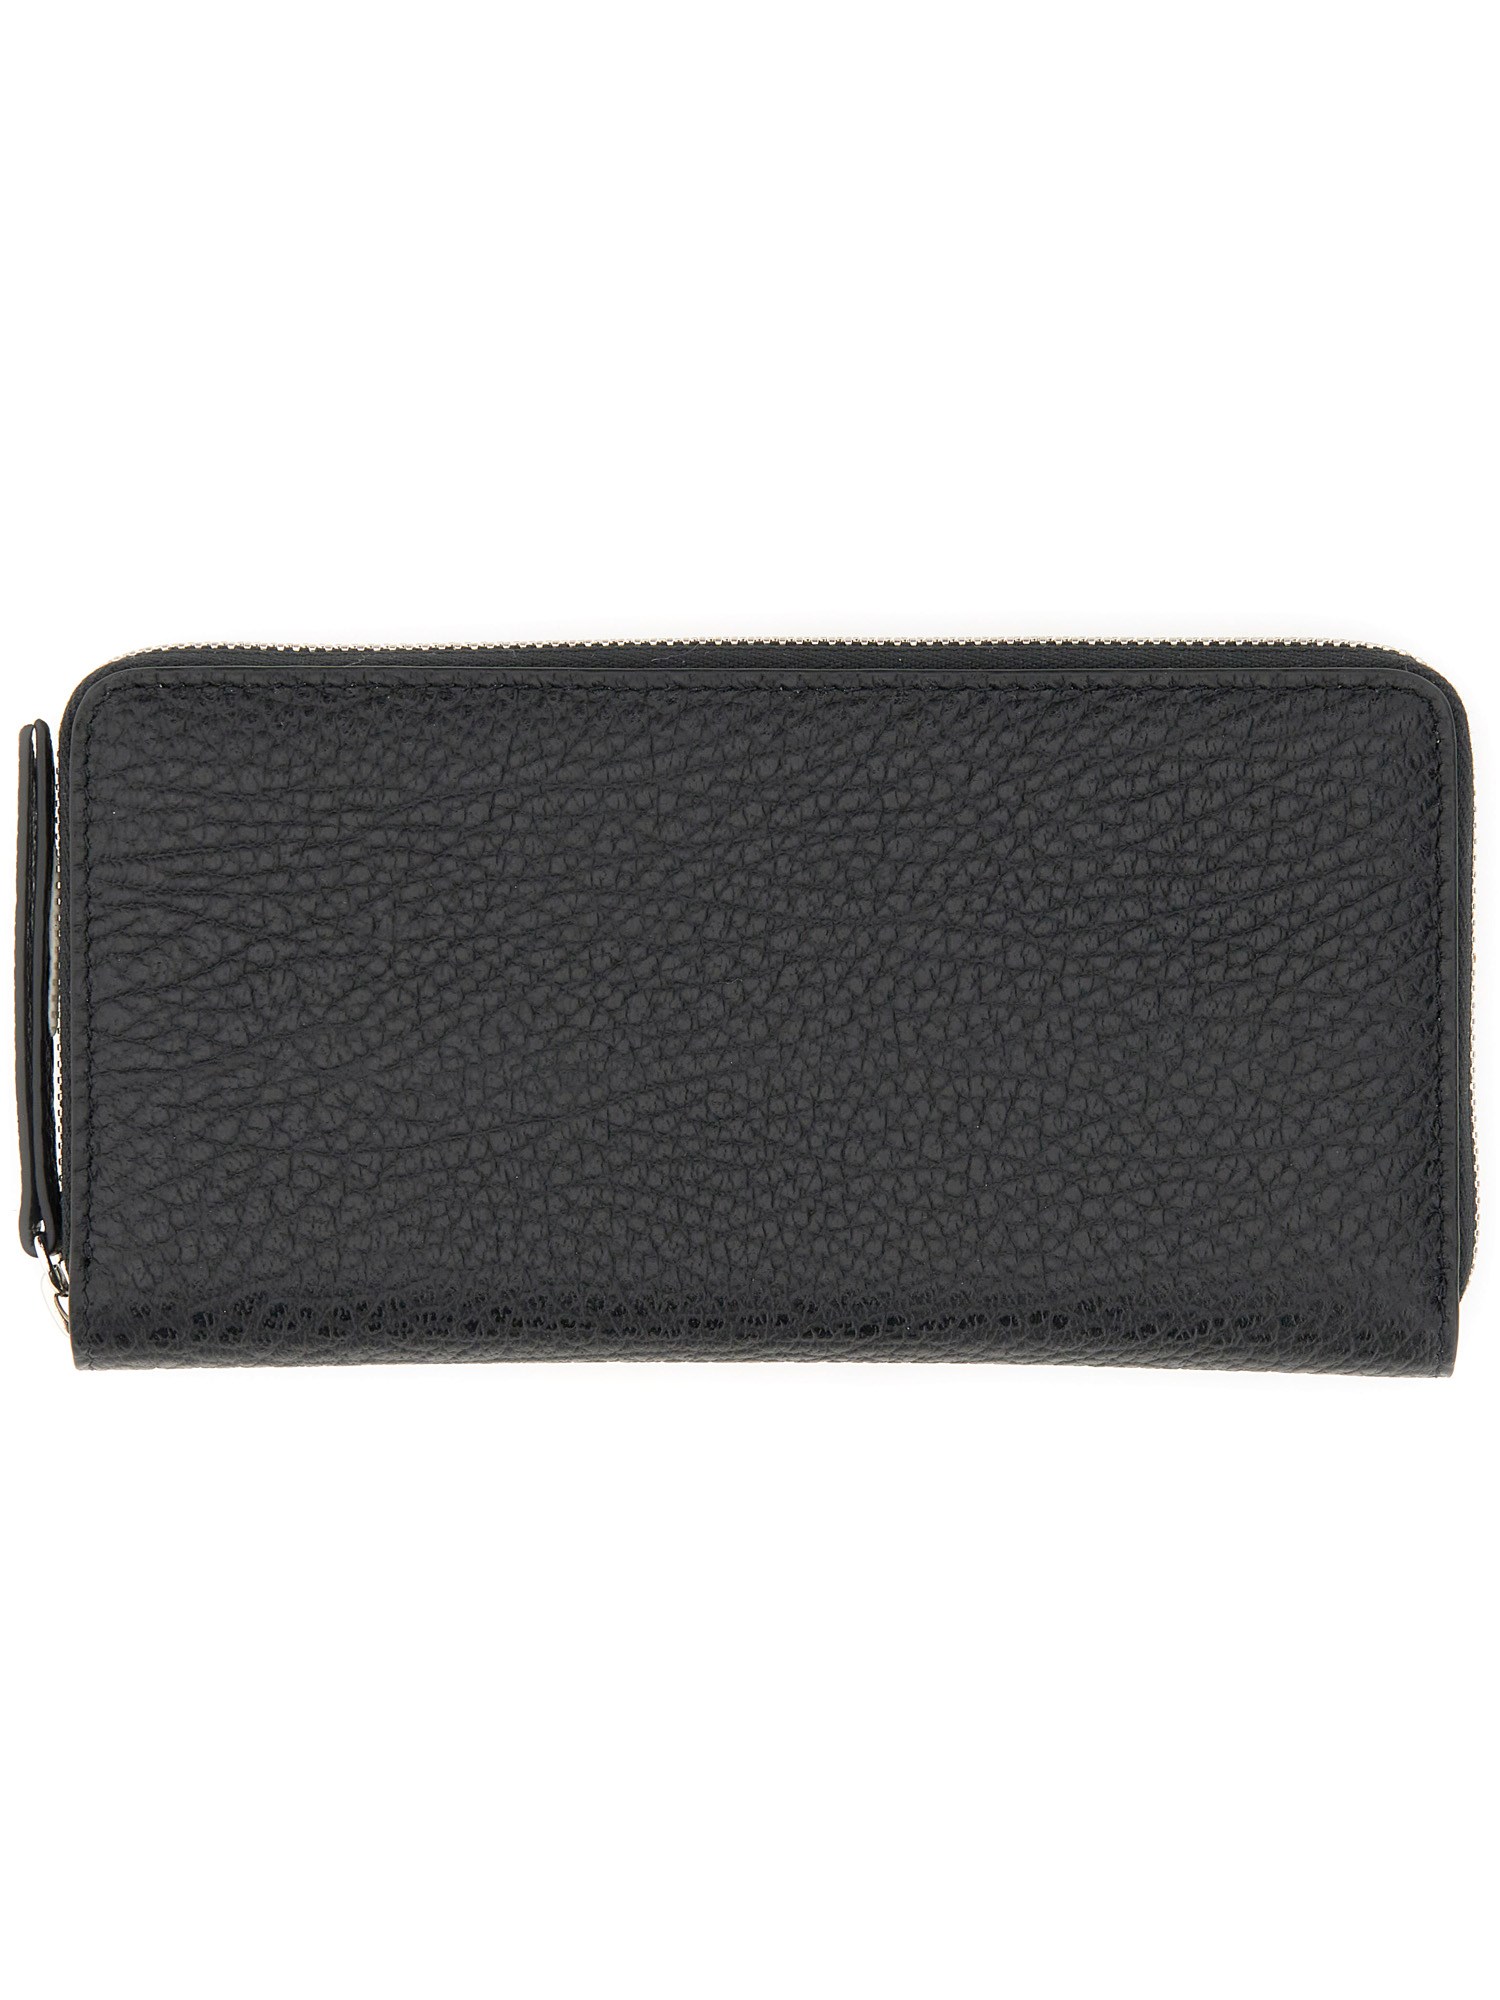 maison margiela leather wallet